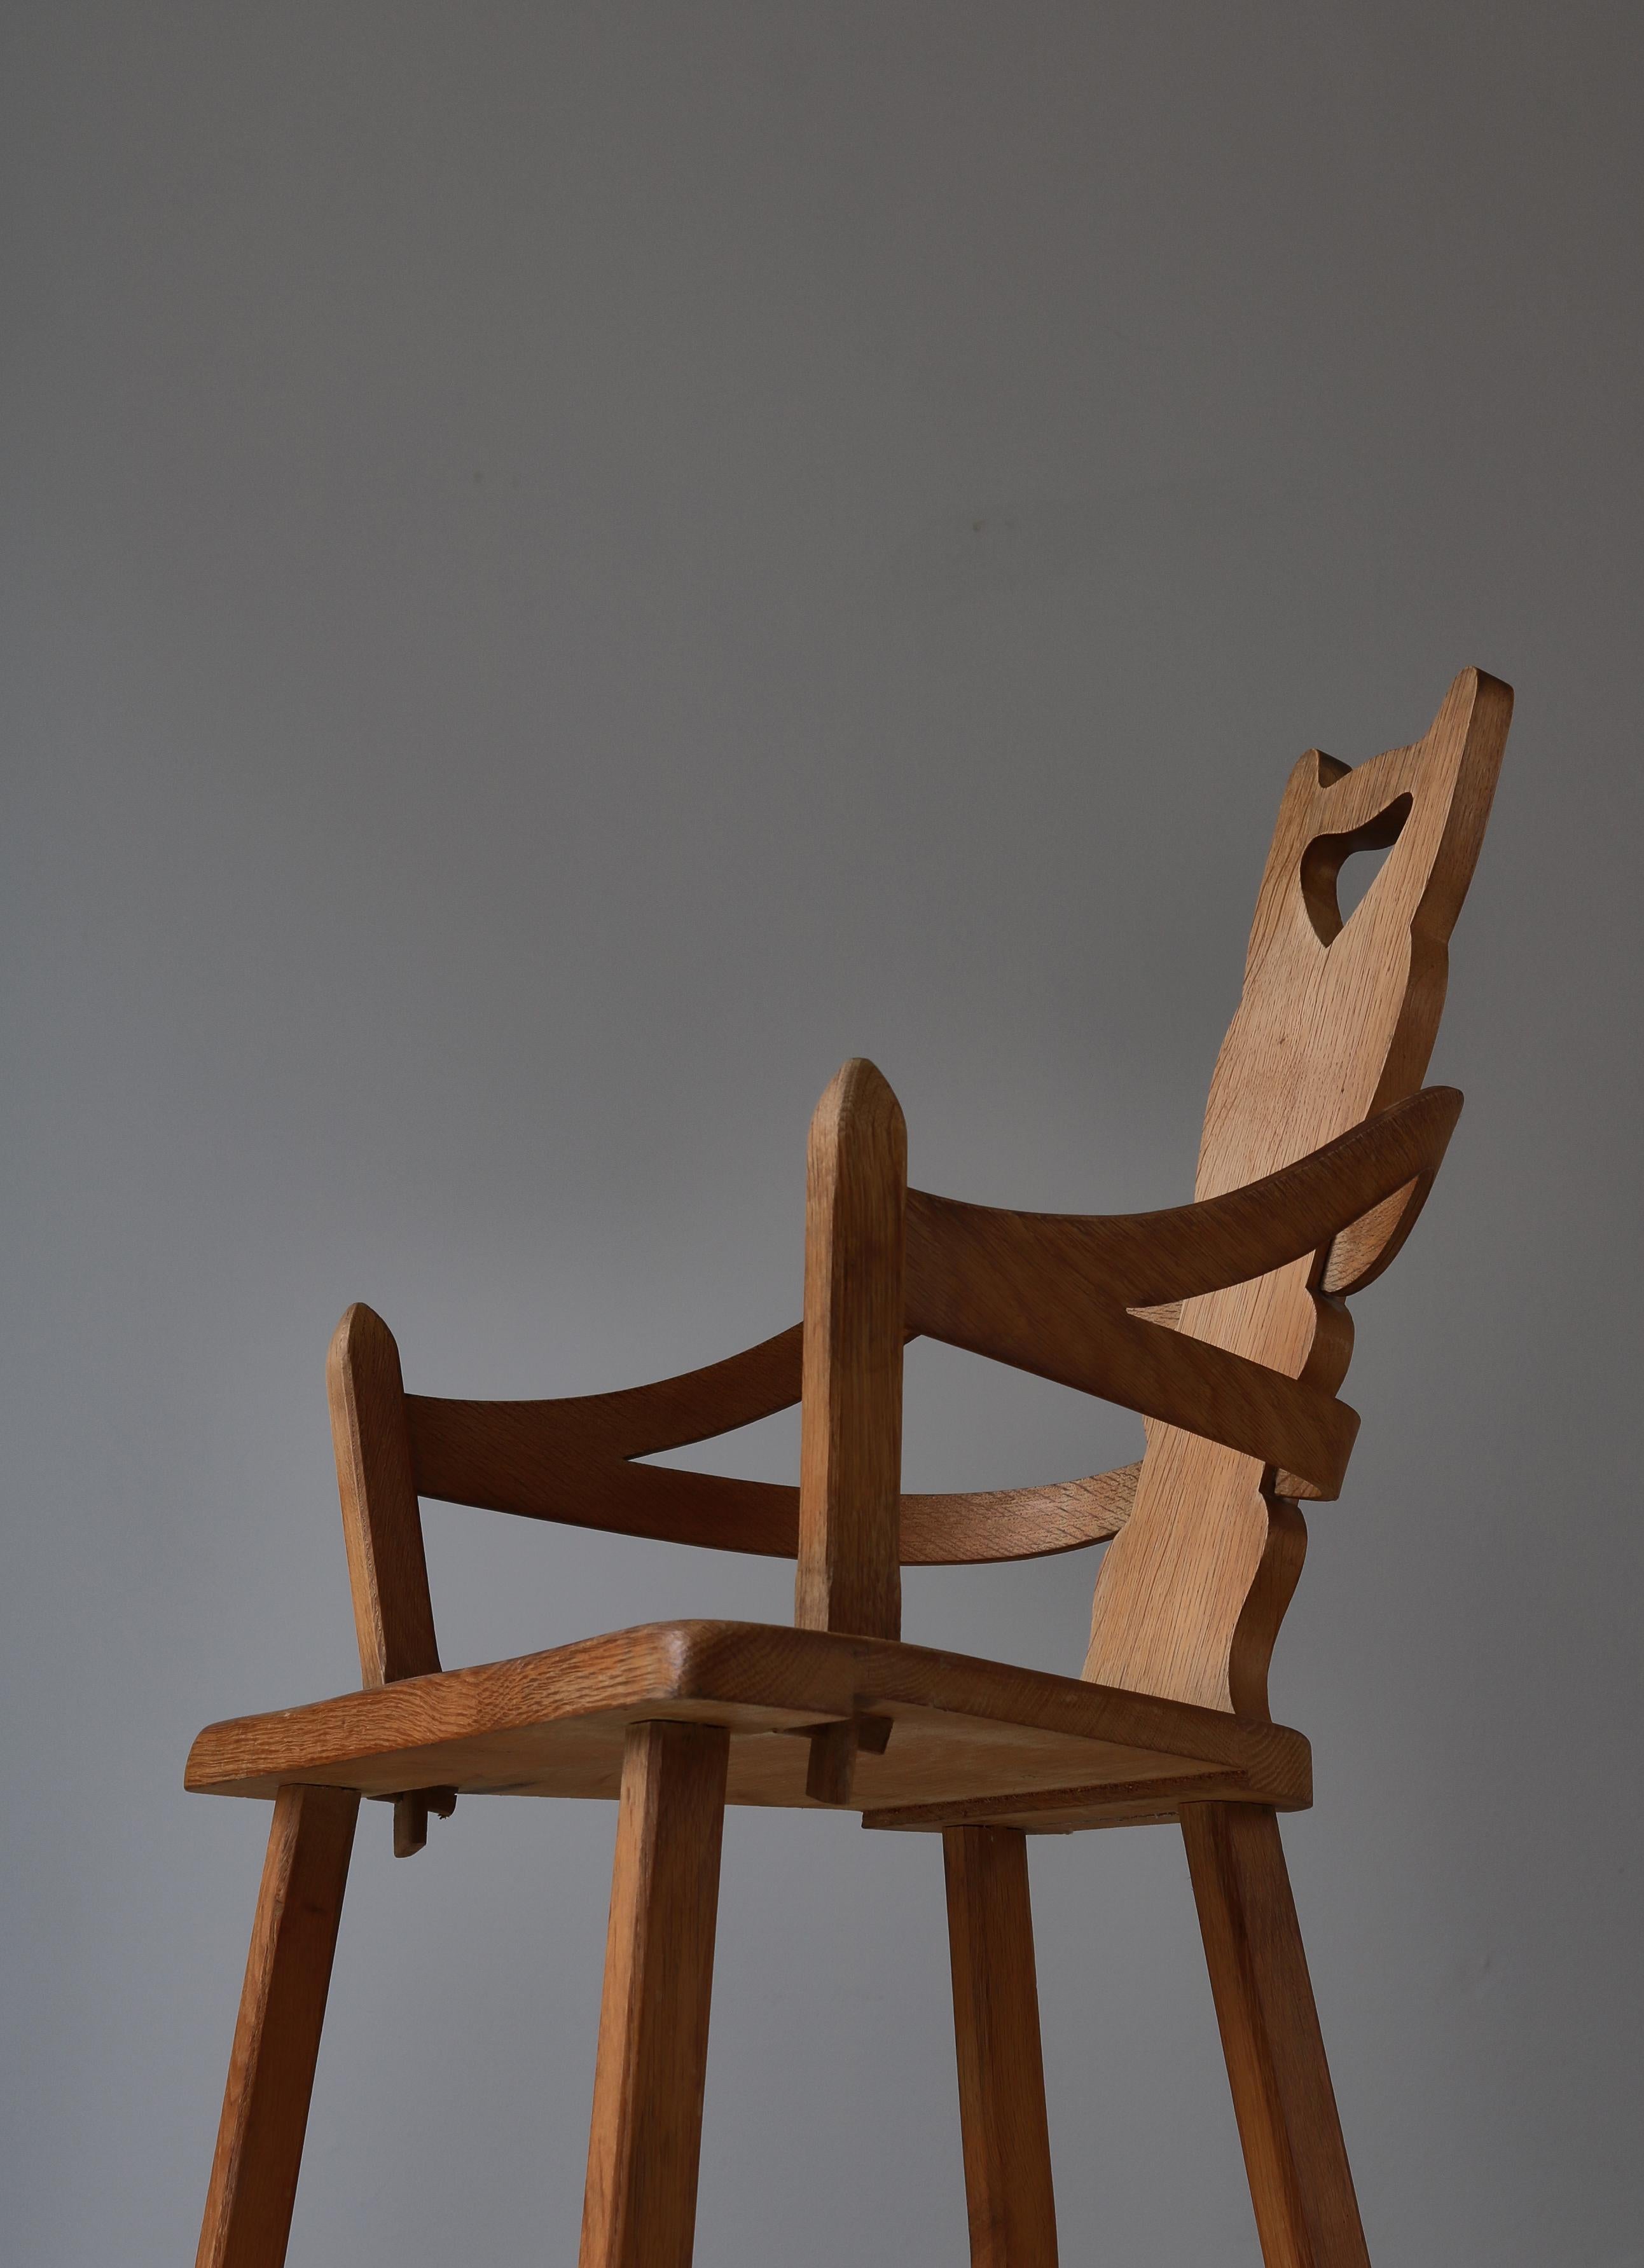 Swedish Folk Art Chair Handmade in Oakwood, 1900s For Sale 4